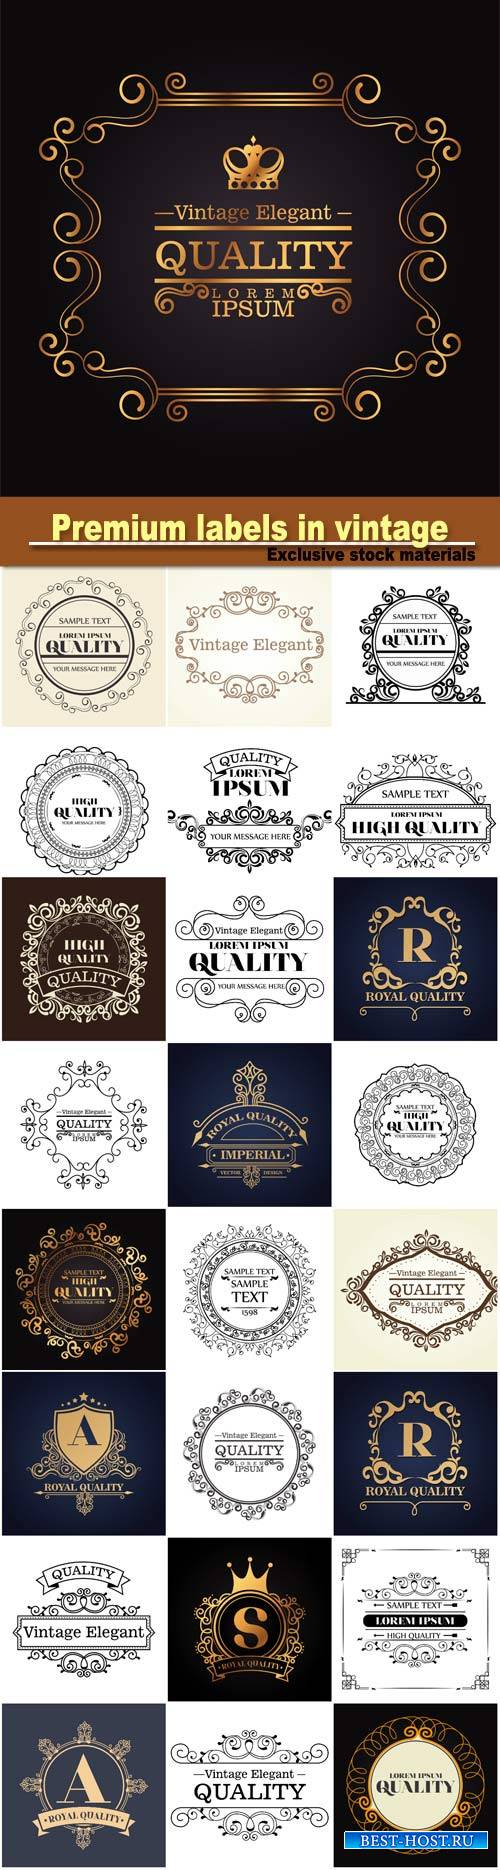 Premium labels in vintage style